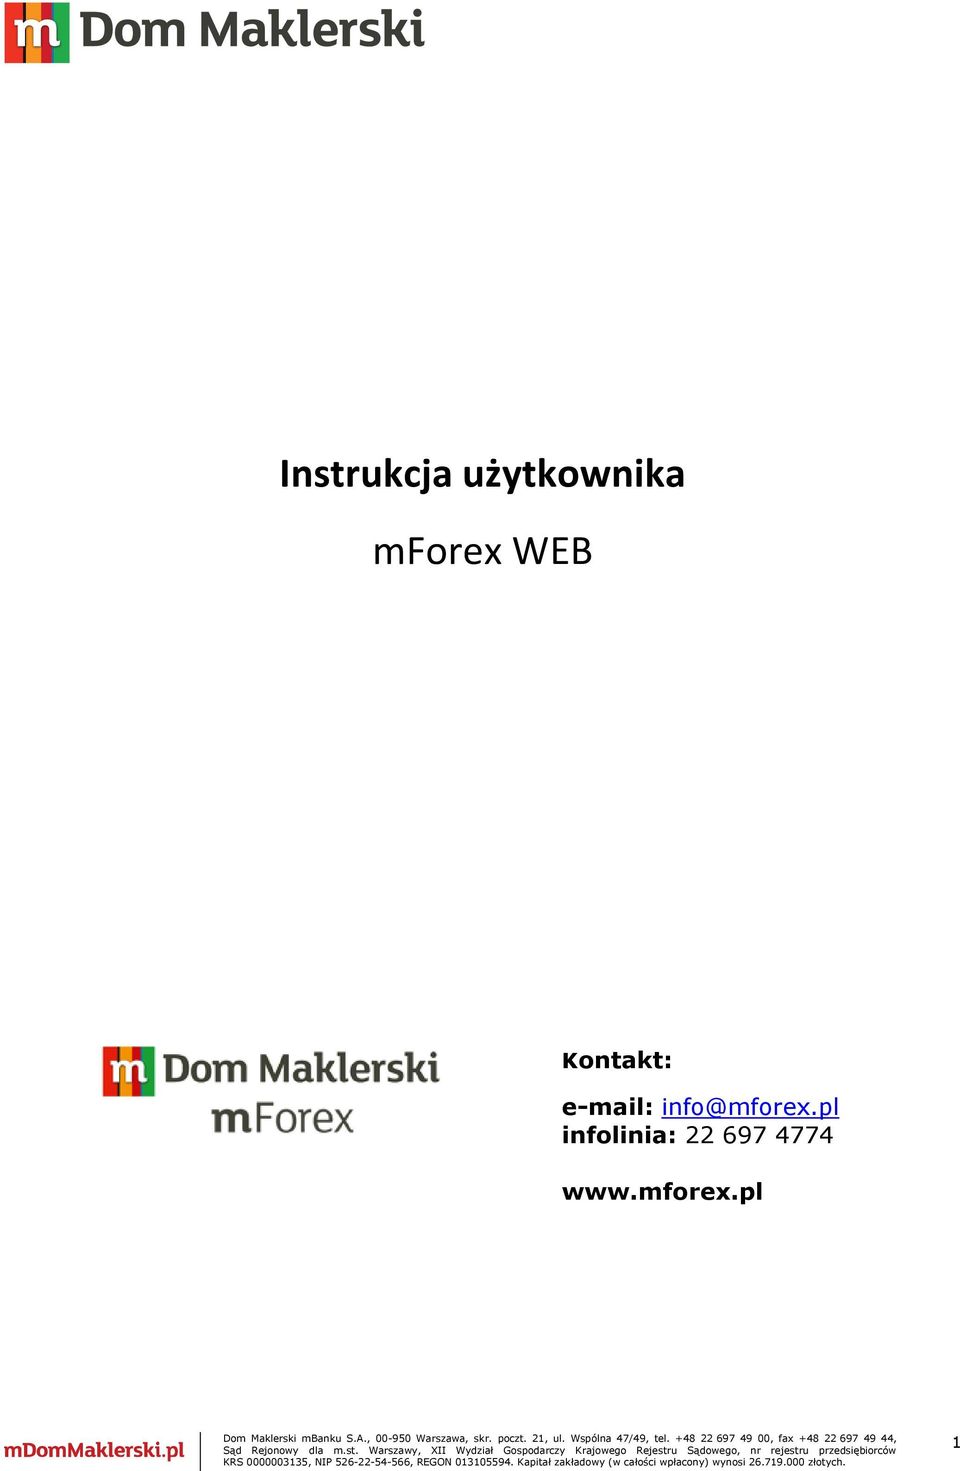 e-mail: info@mforex.